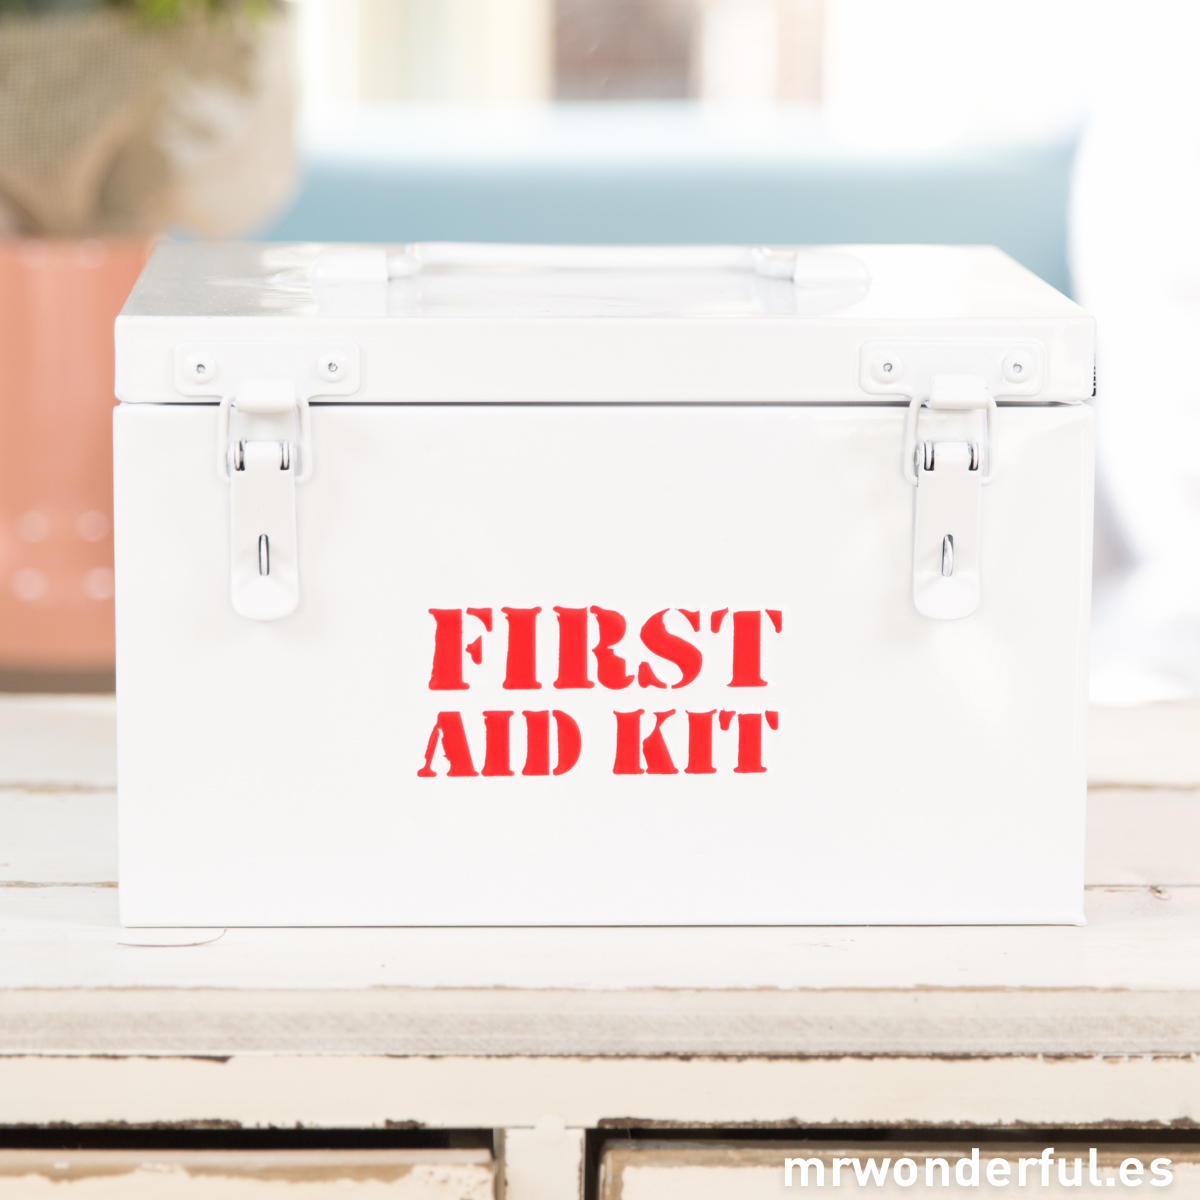 Caja metálica first aid kit Mr.Wonderful